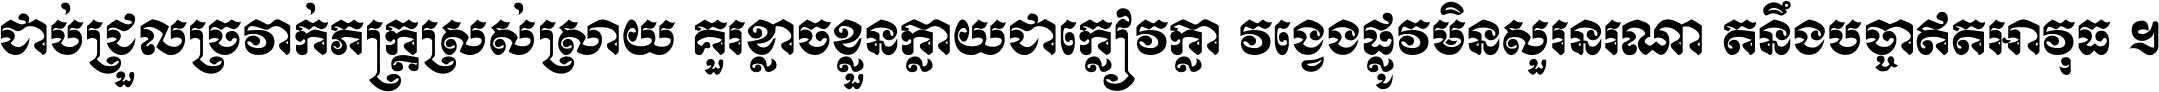 Khmer Mool1